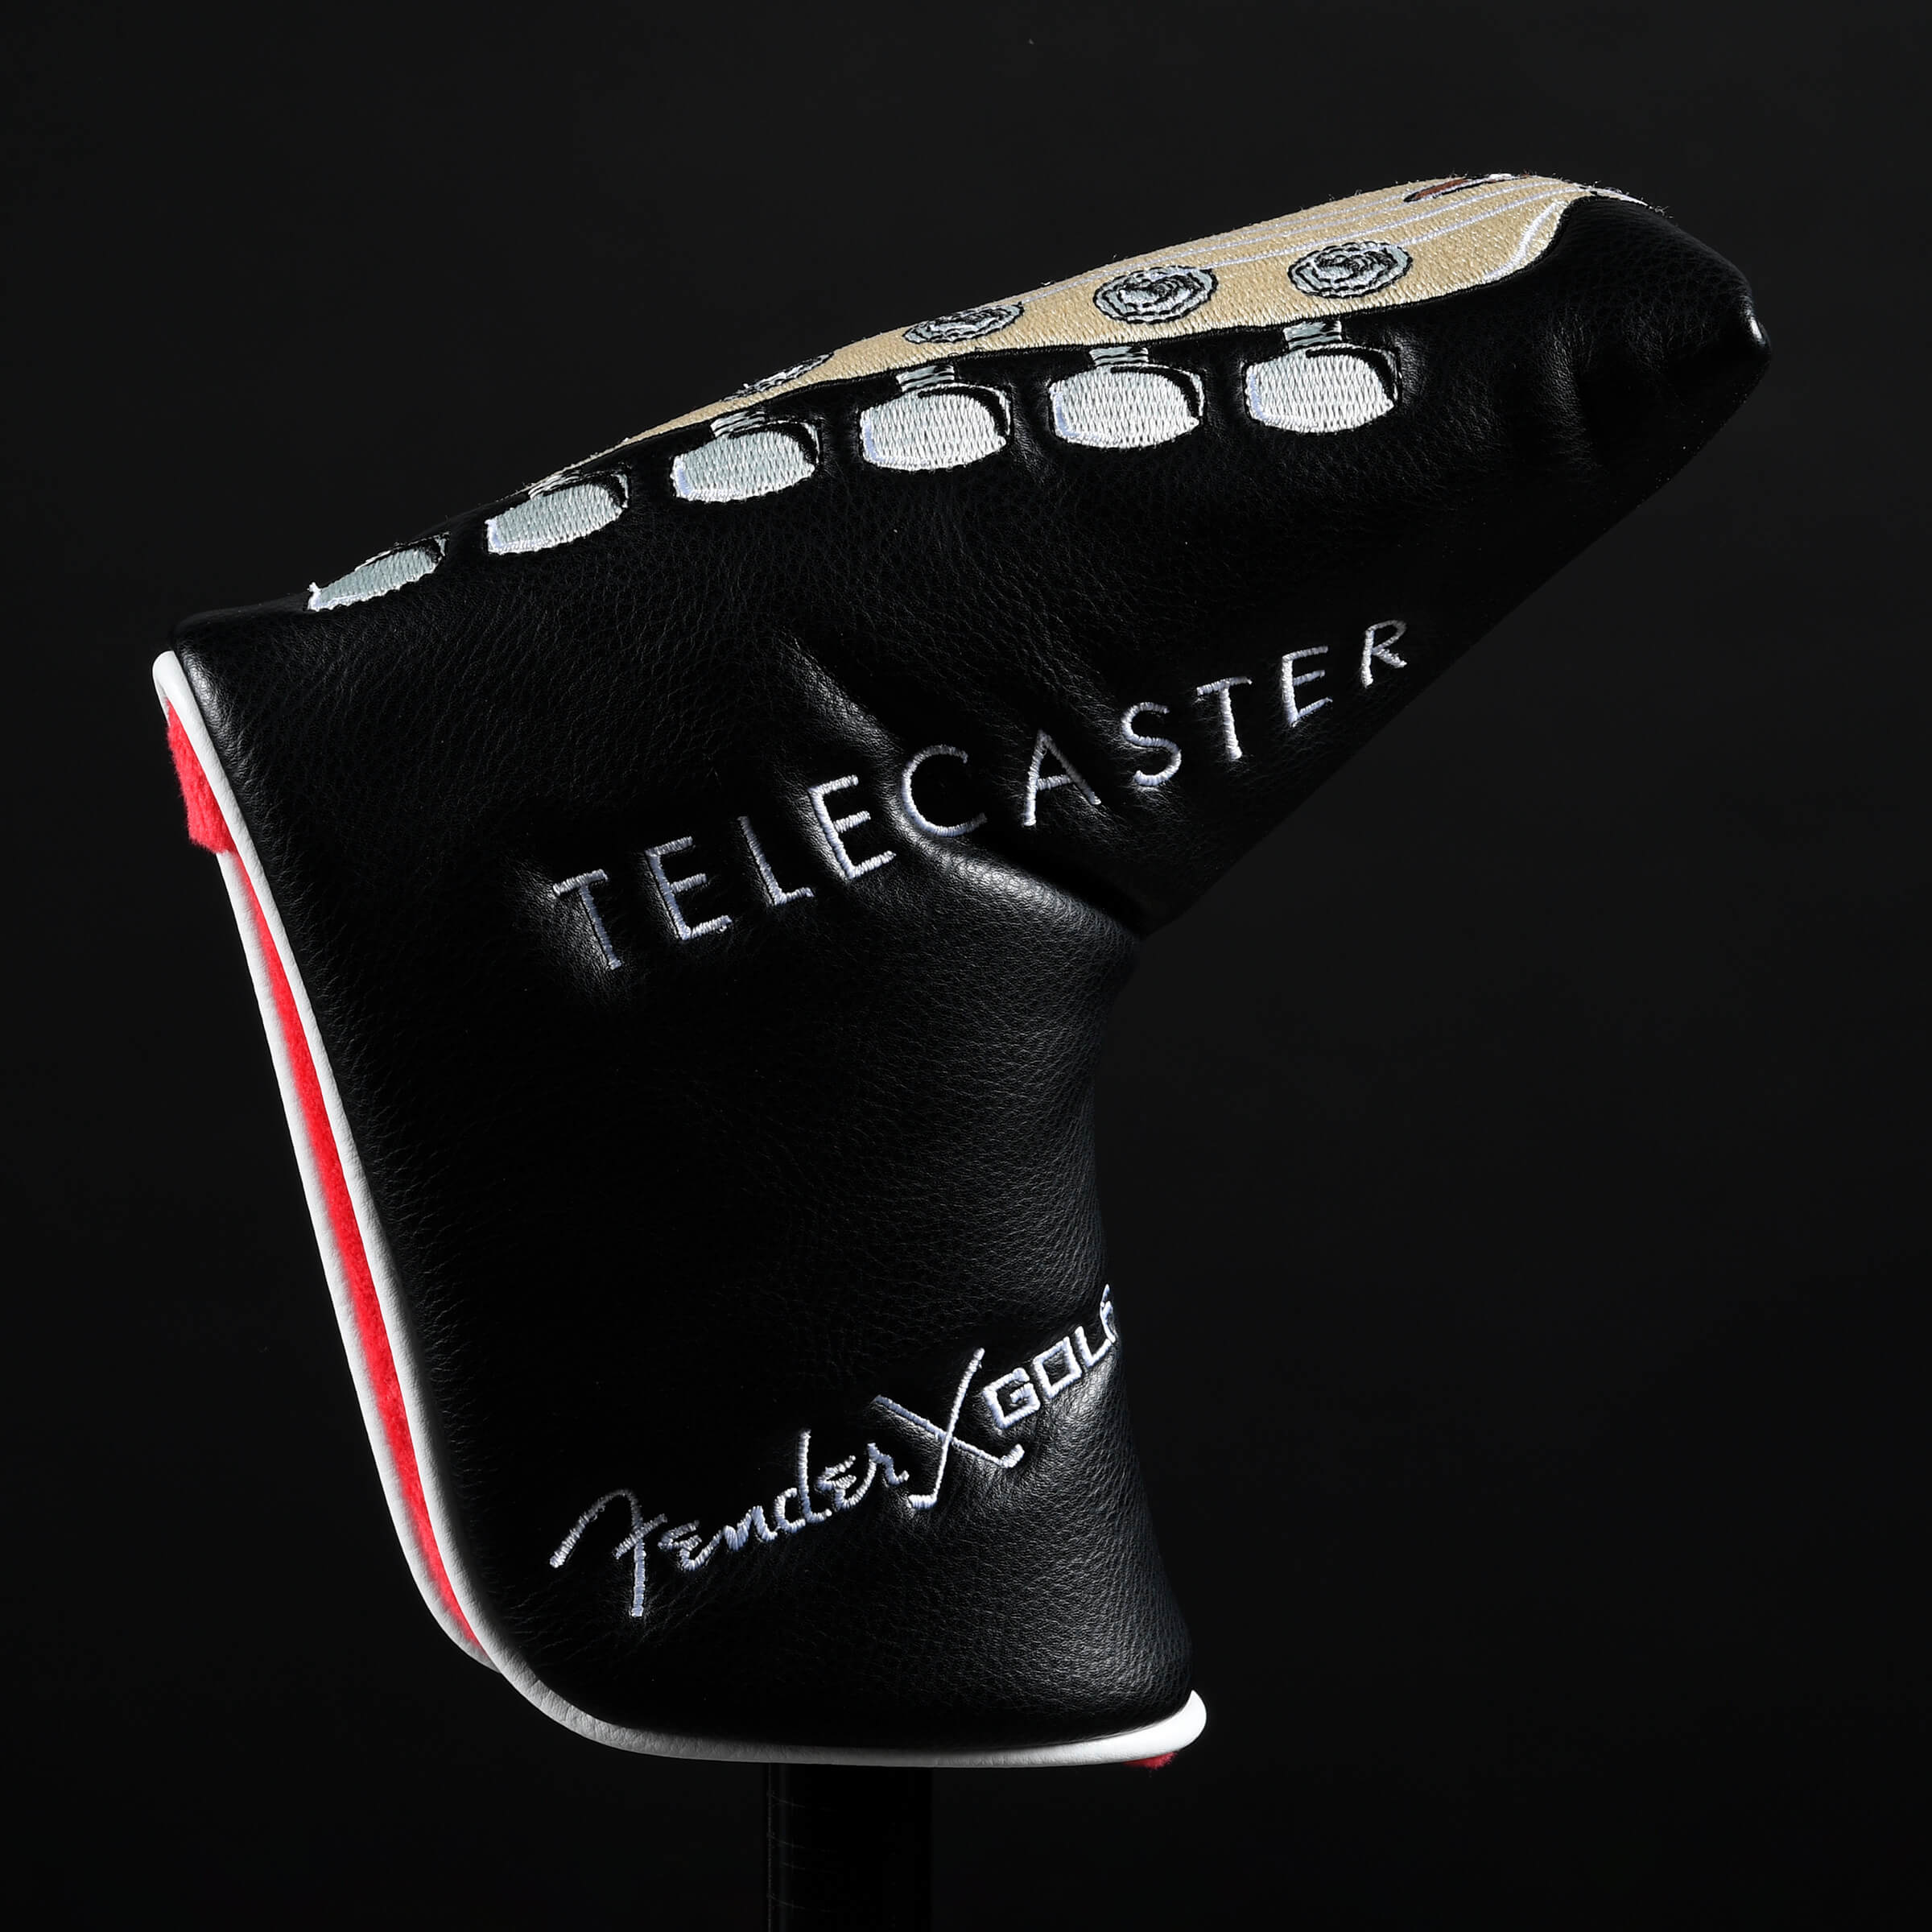 Fender Telecaster - Putter Blade Cover